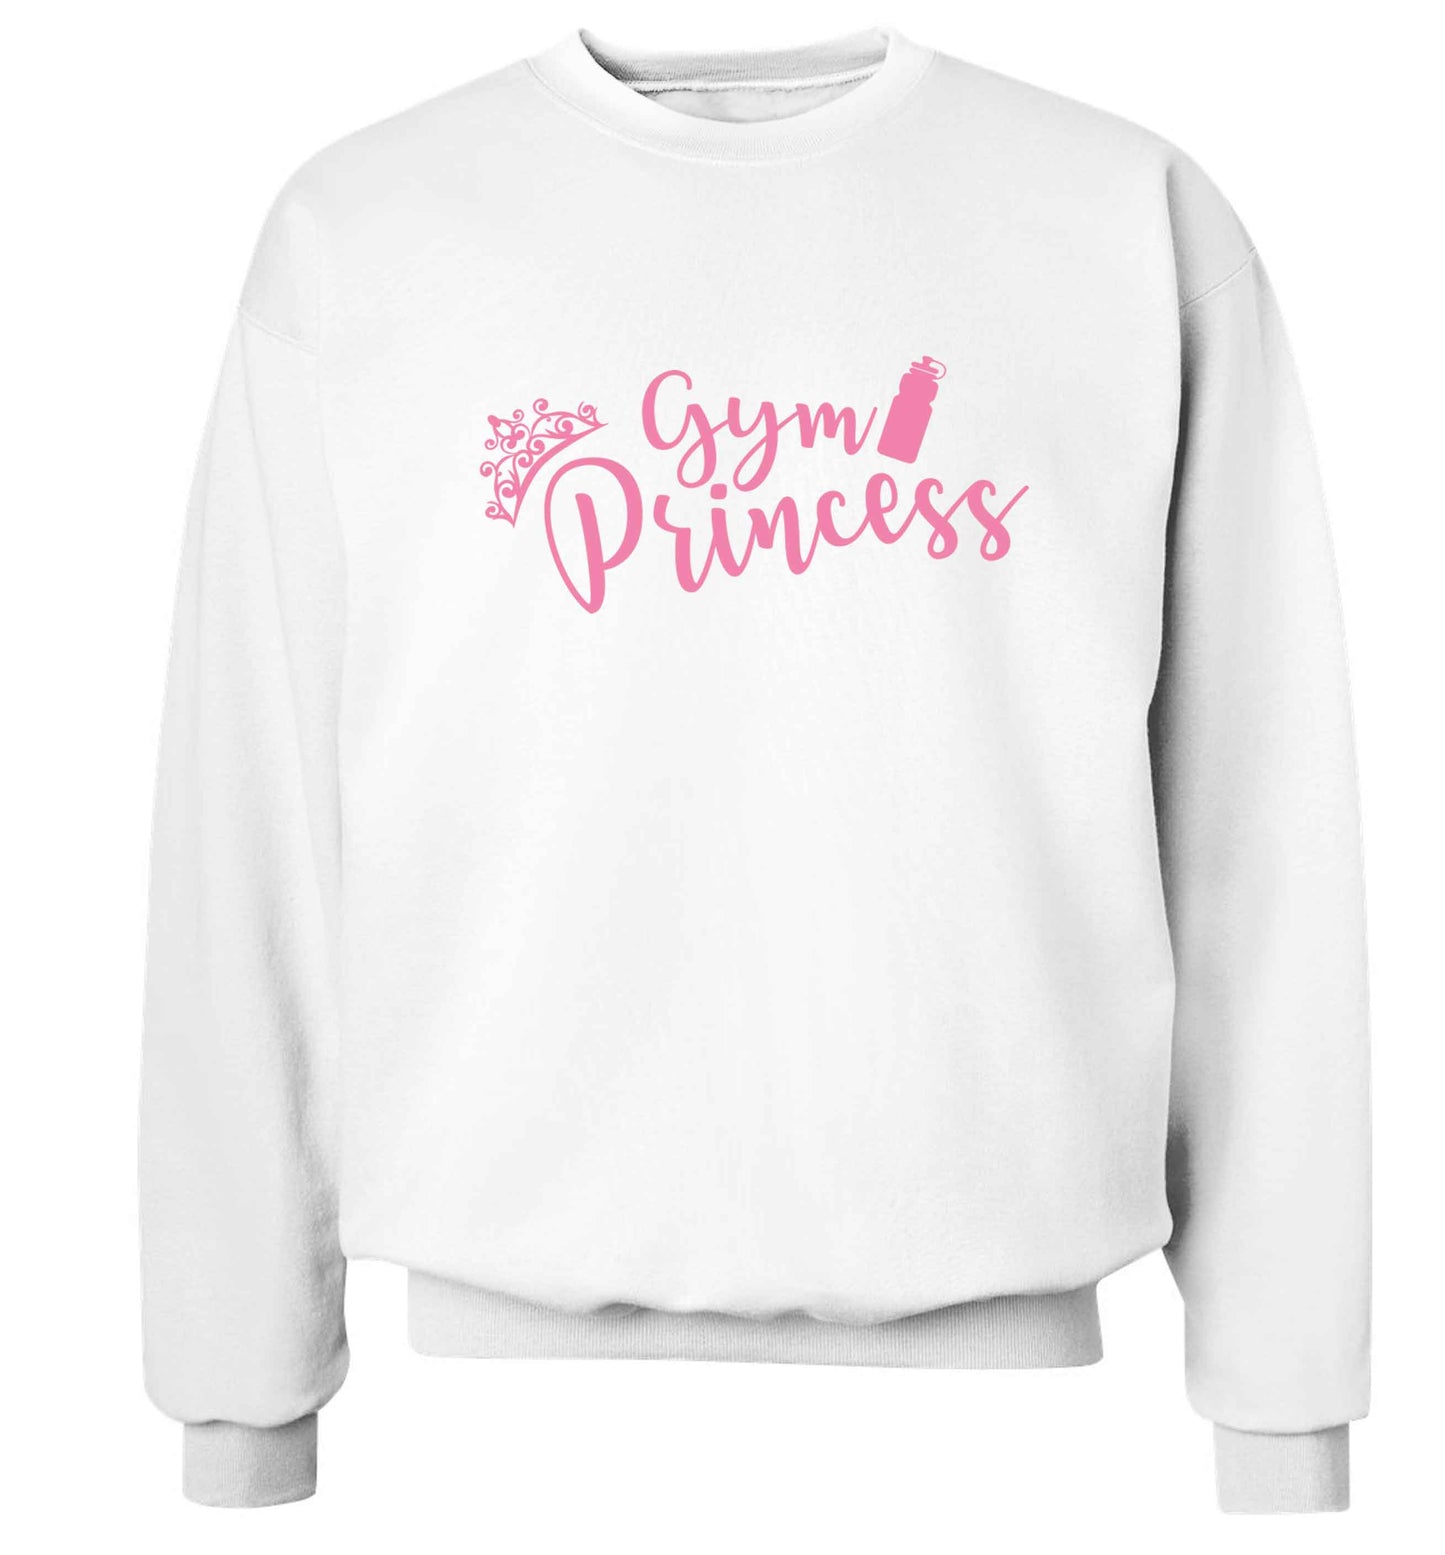 Gym princess Adult's unisex white Sweater 2XL